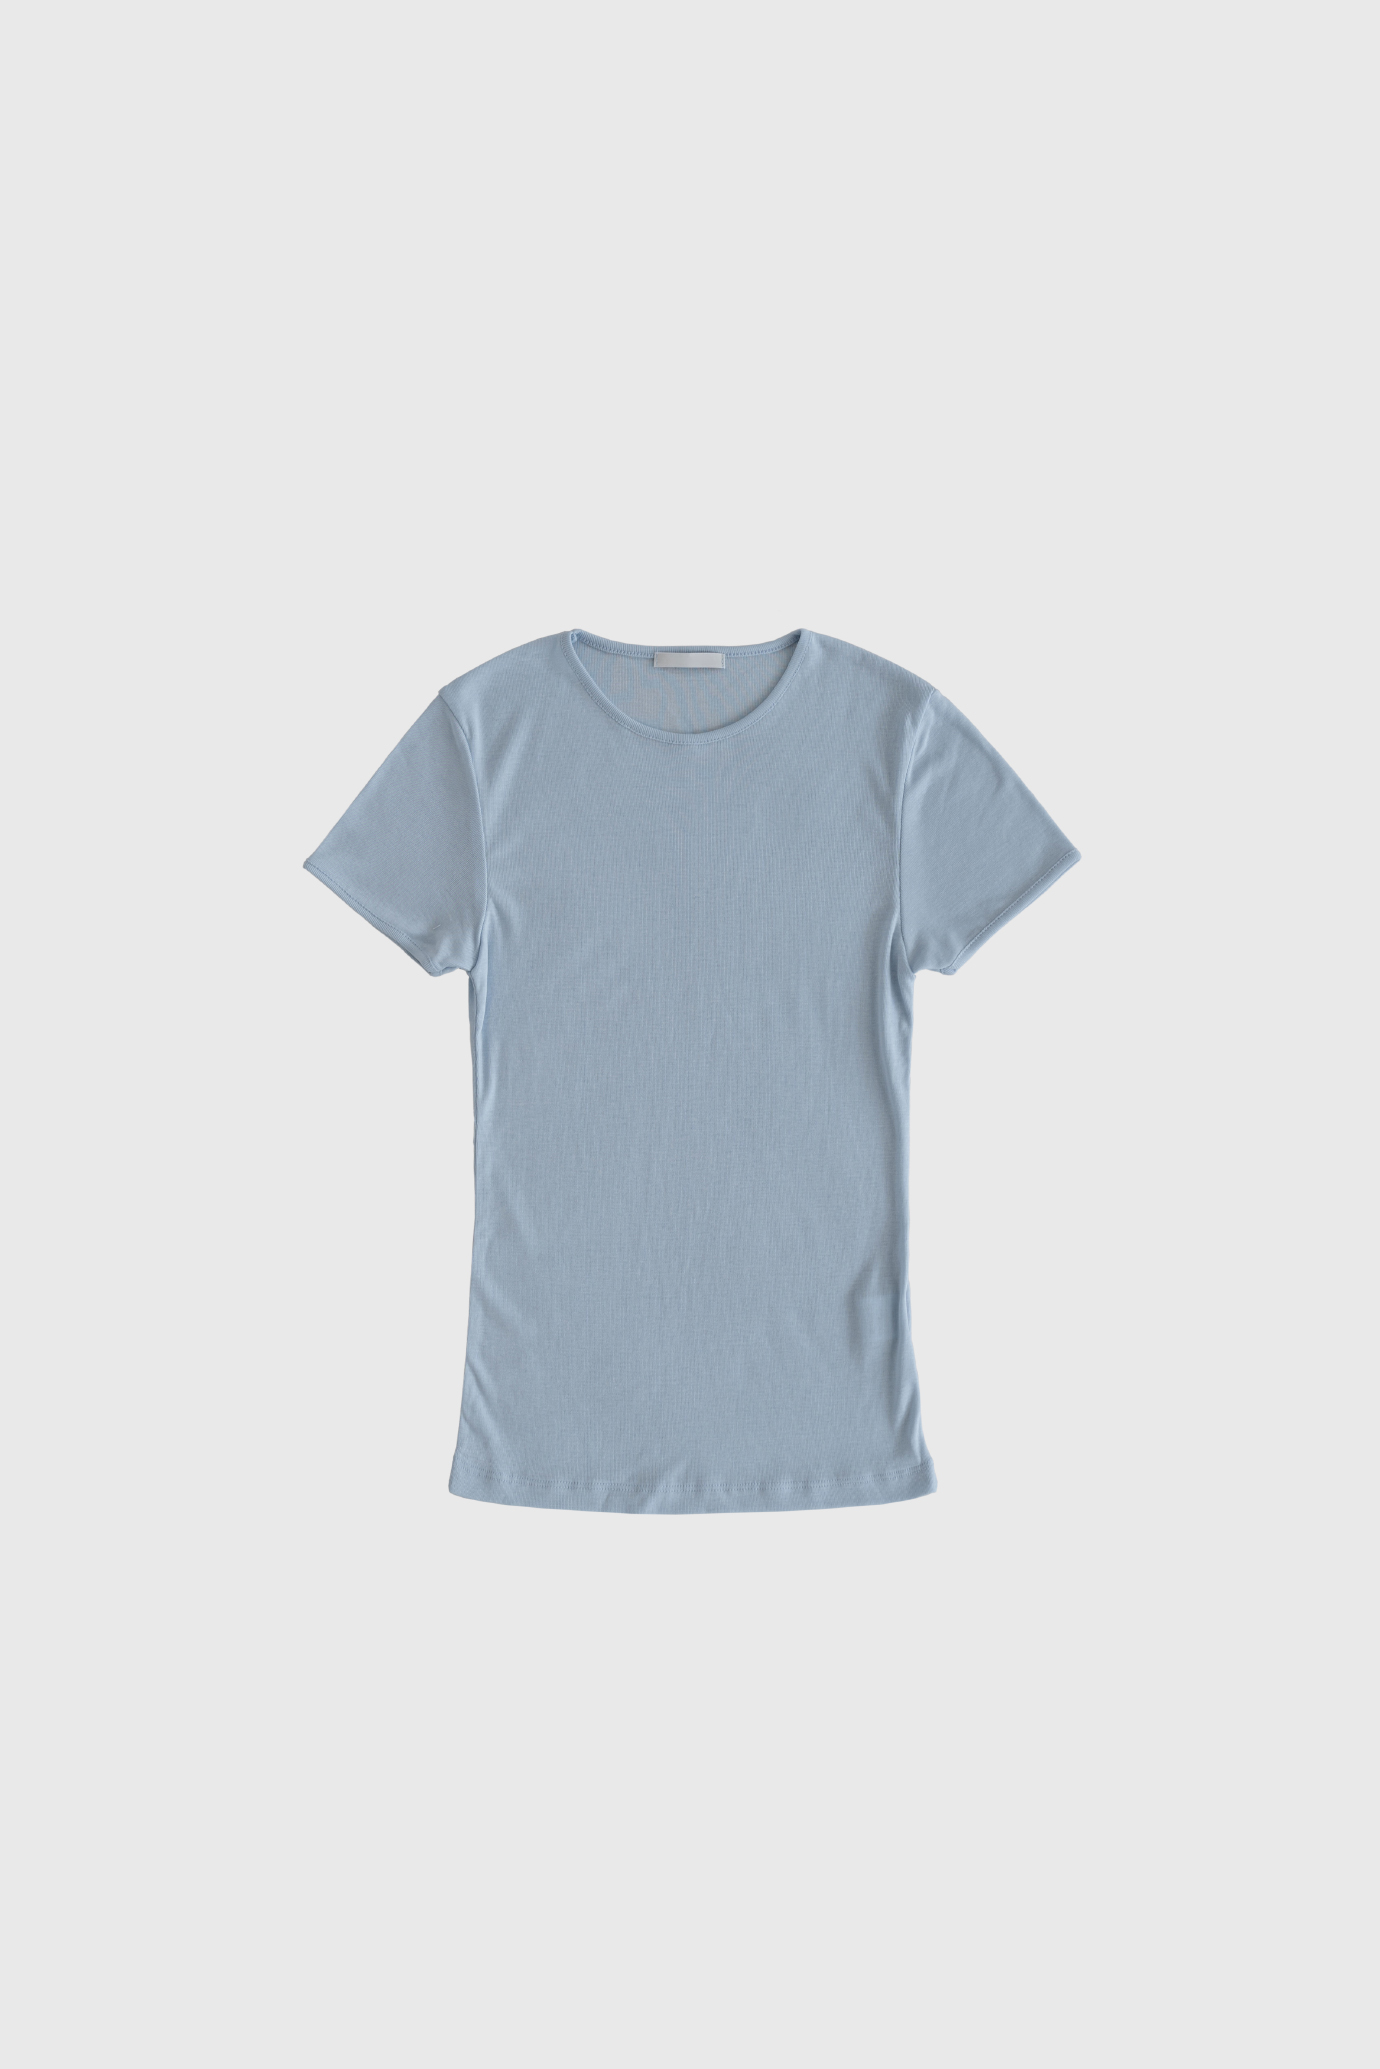 17756_Cotton Jersey T_Shirt  [주문일로부터 3일이내 배송]